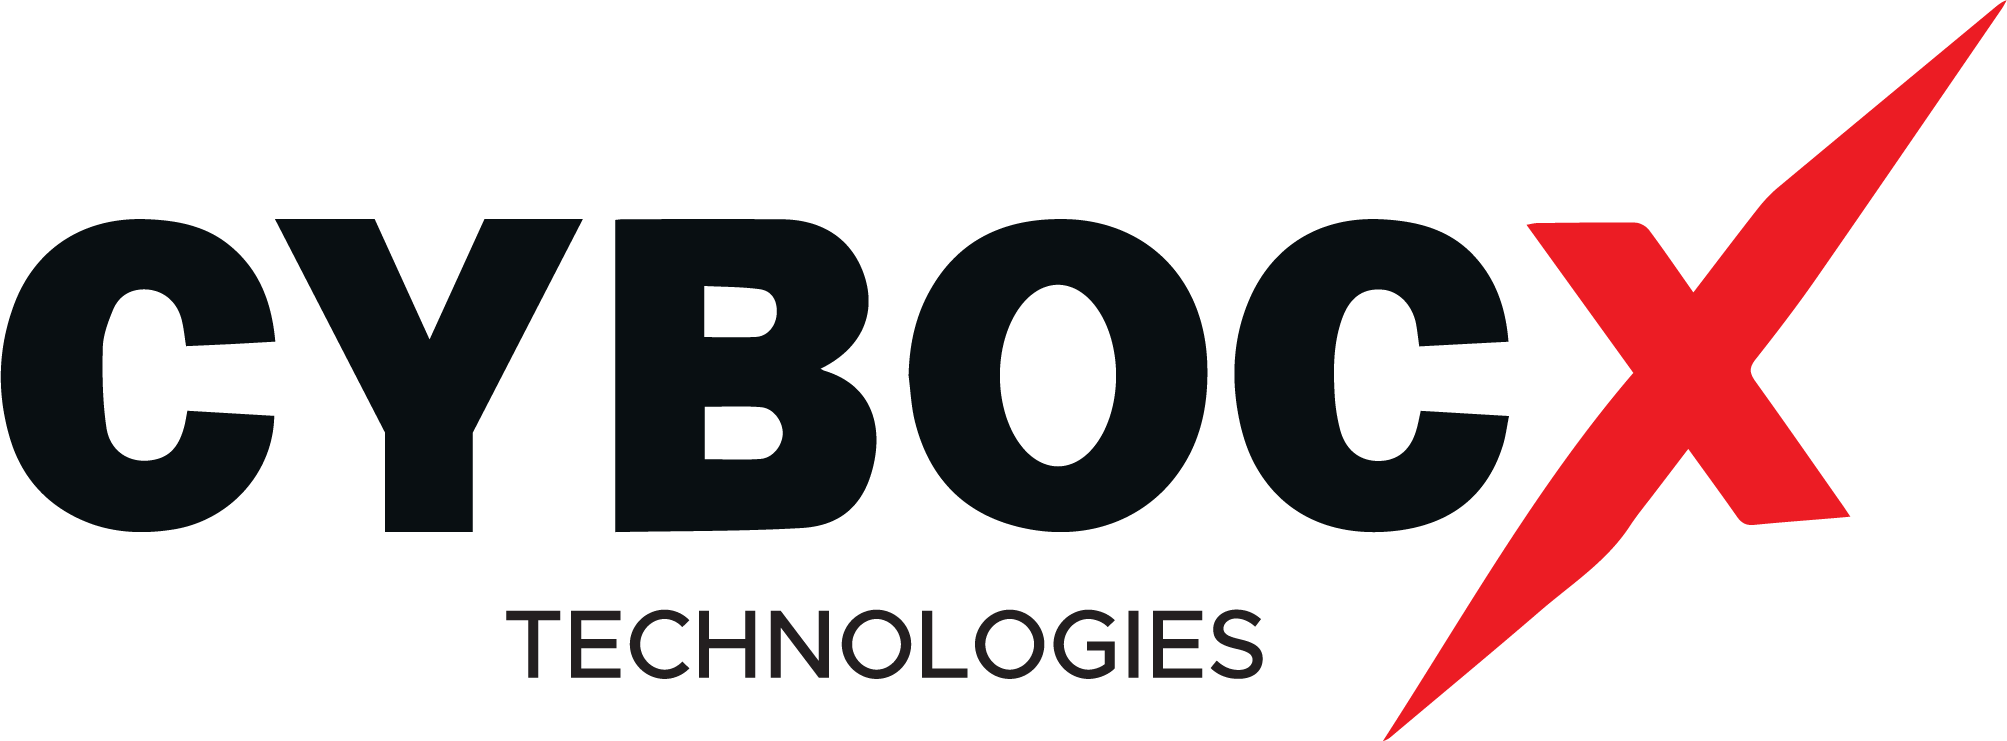 Cybocx Technologies